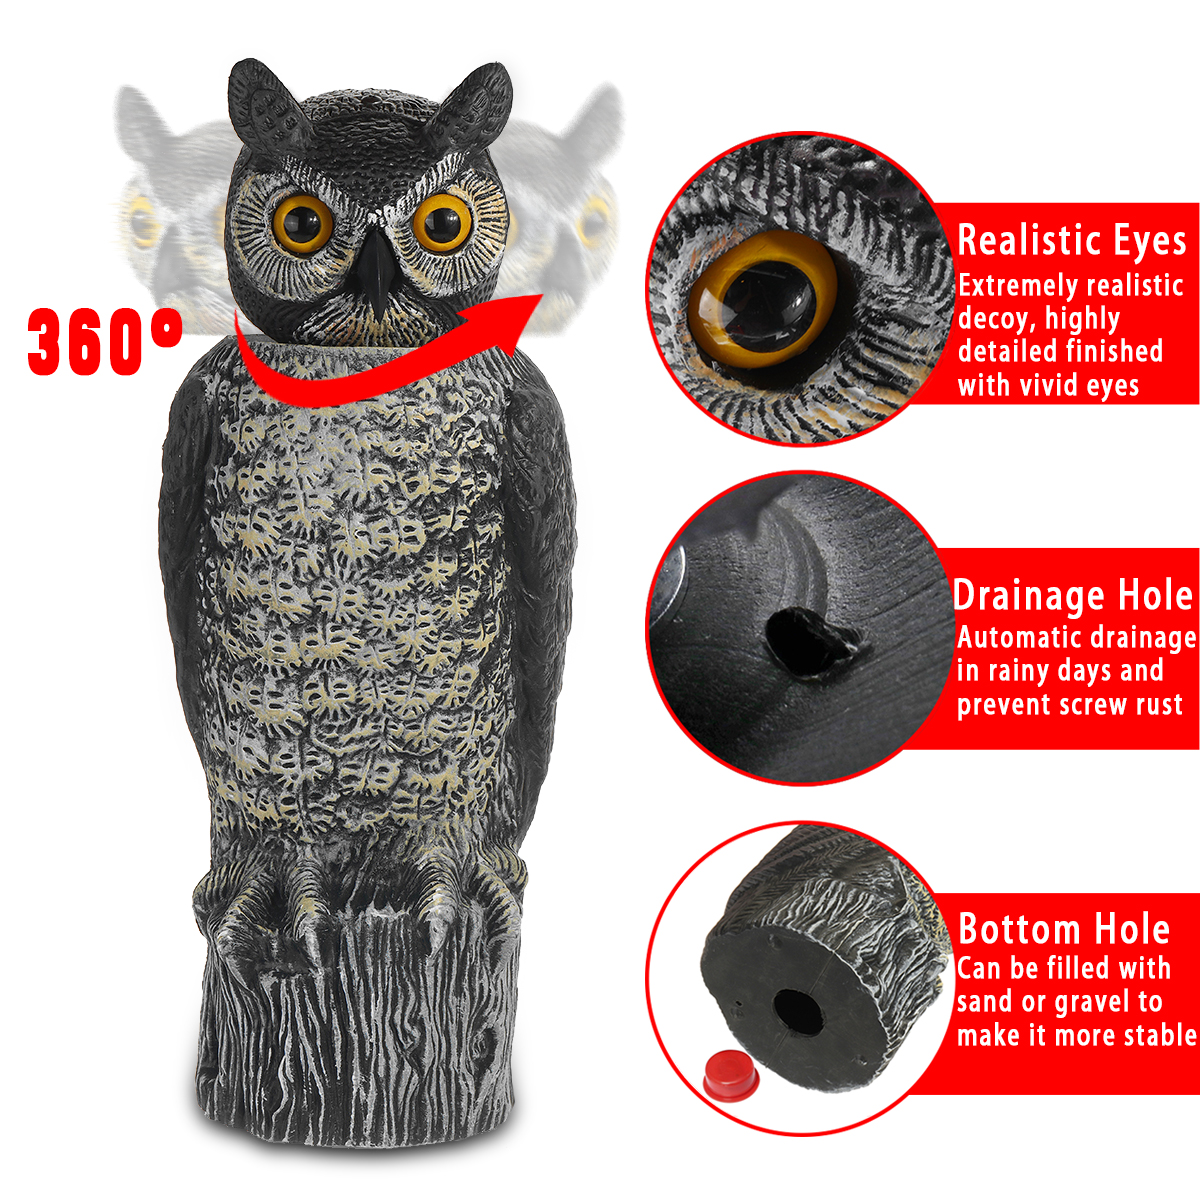 Rotating-Head-Owl-Decoy-Protection-Repellent-Bird-Pest-Control-Scarecrow-Garden-Yard-Decorations-1461479-2